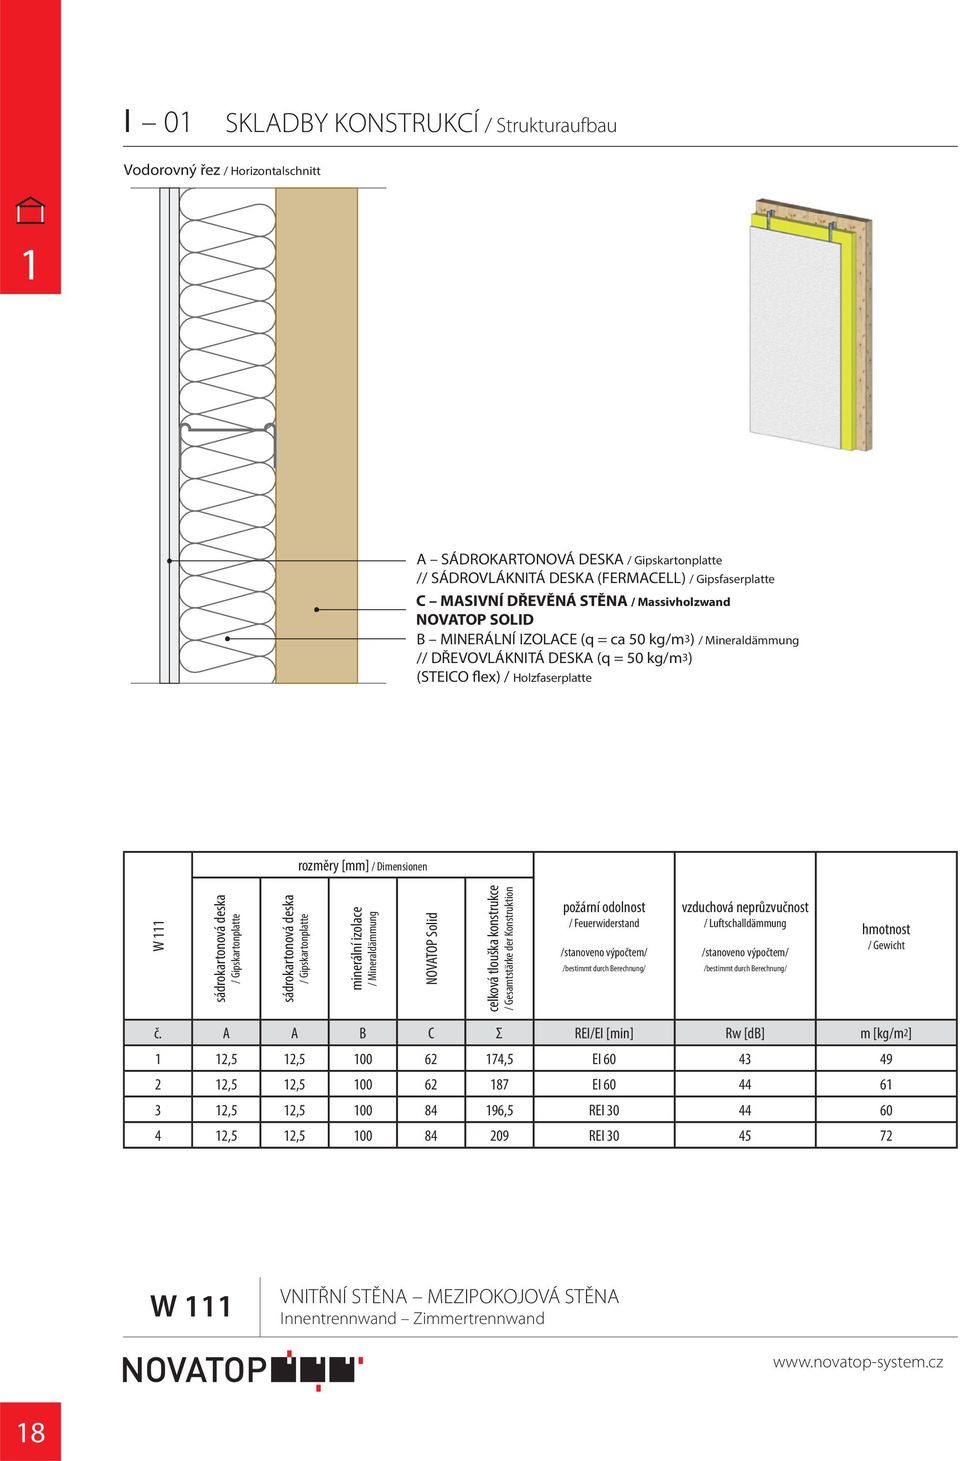 deska / Gipskartonplatte minerální izolace / Mineraldämmung konstrukce / Gesamtstärke hmotnost / Gewicht č.